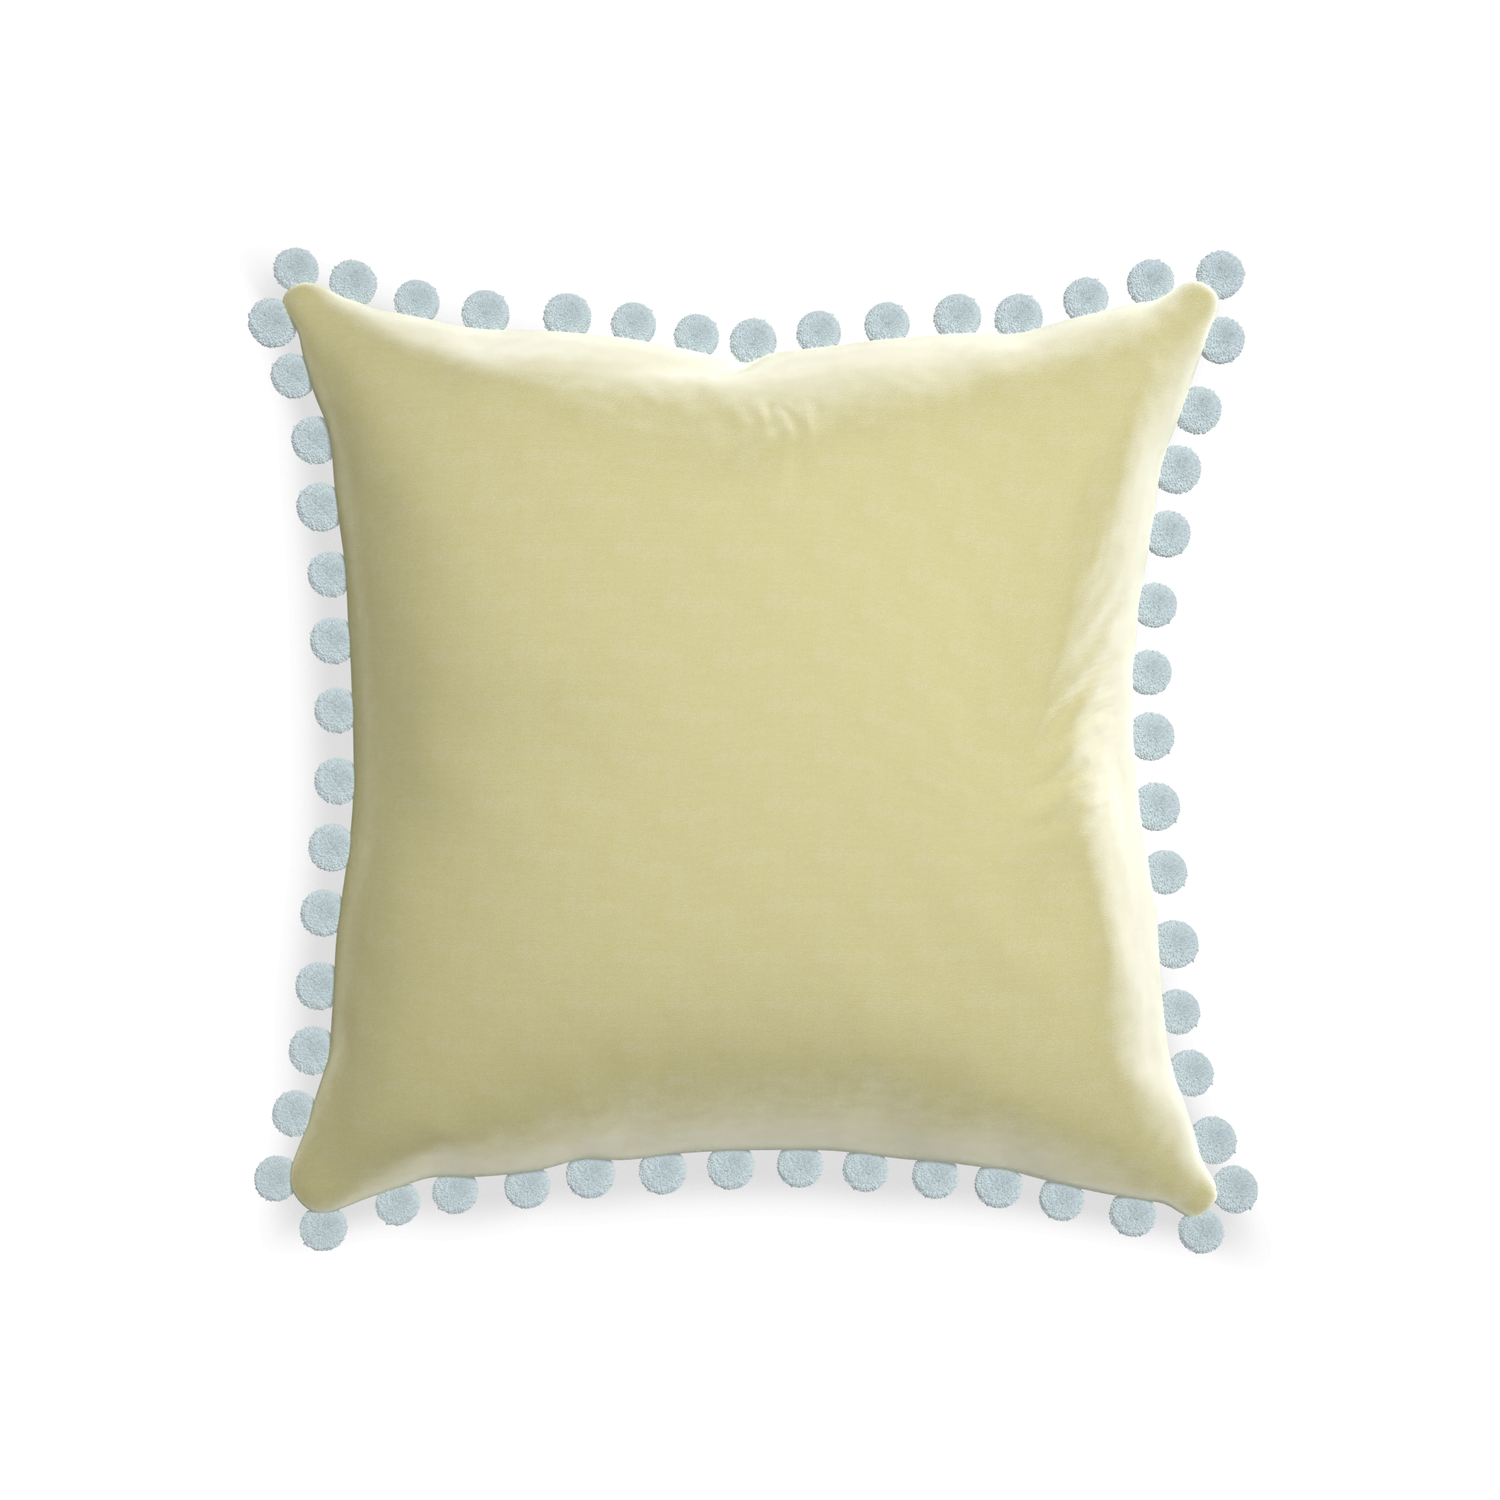 square light green pillow with light blue pom poms